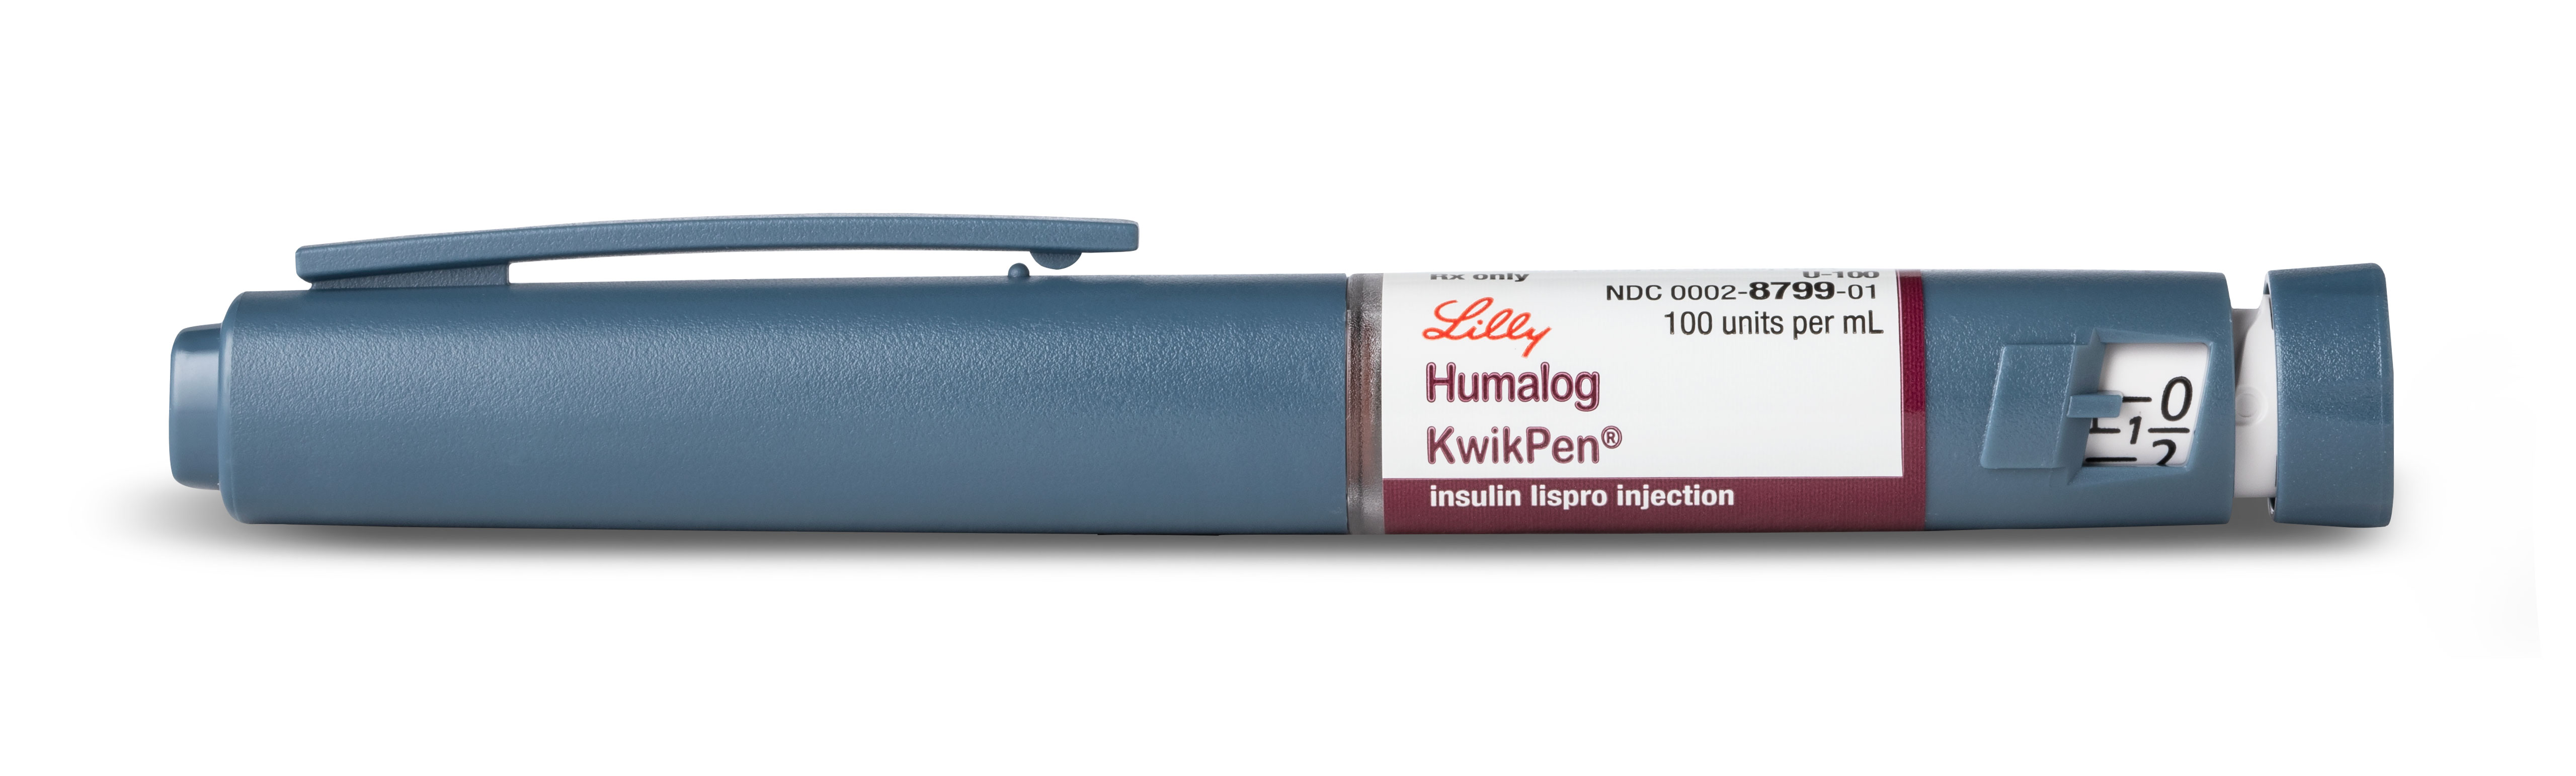 How To Use U 100 U 200 KwikPen Humalog insulin Lispro Injection 